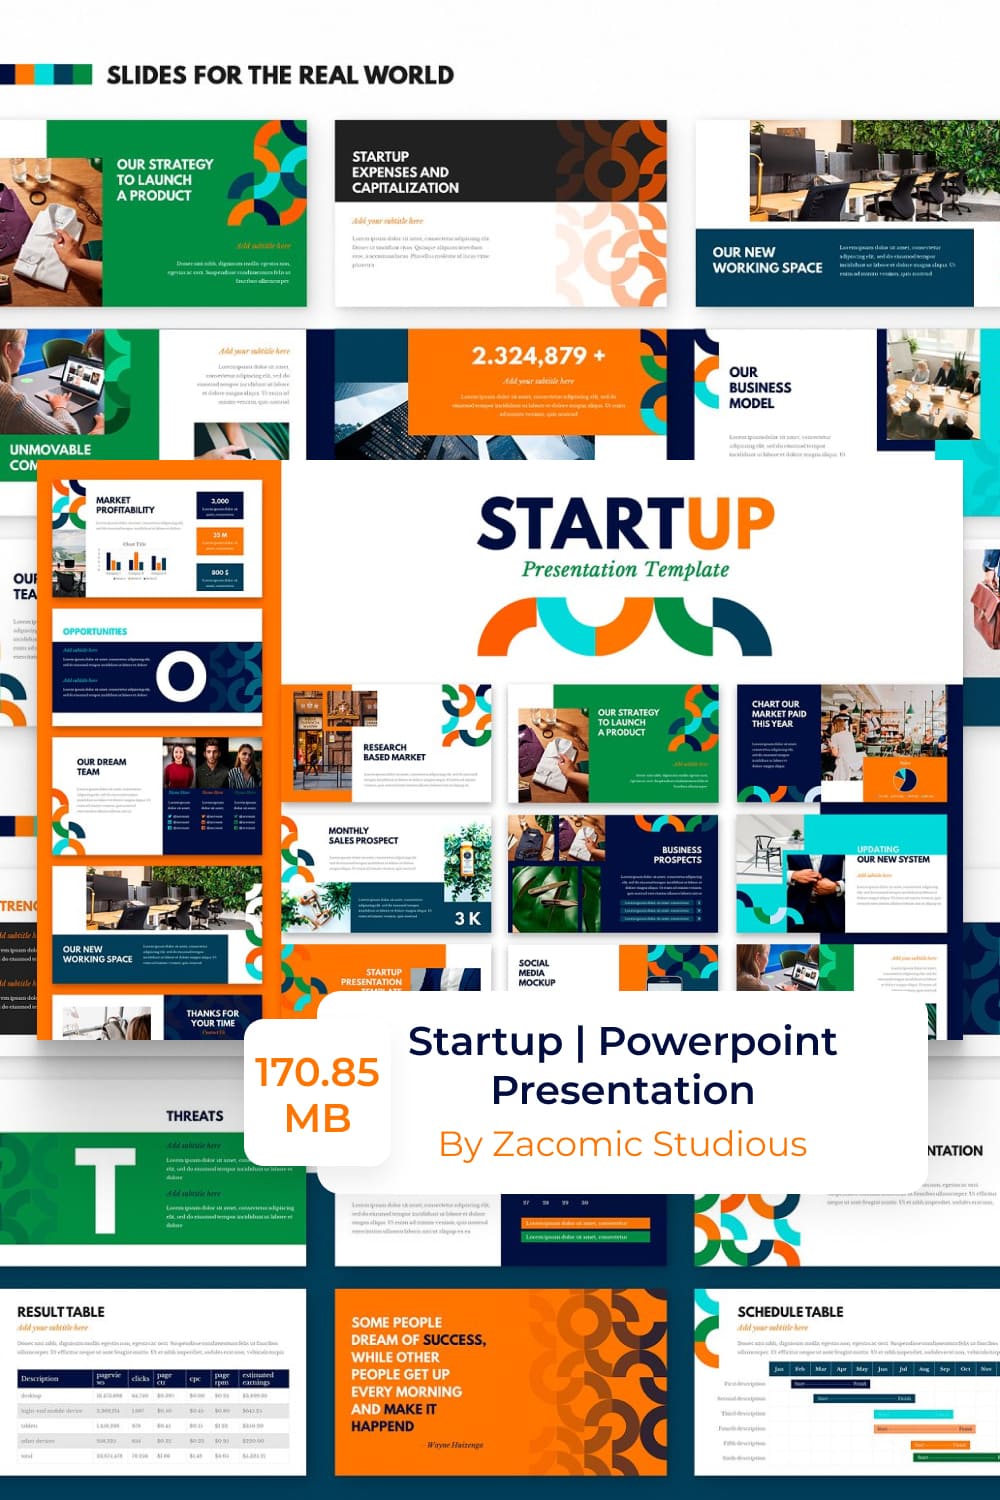 Startup Powerpoint Presentation Template by MasterBundles Pinterest Collage Image.